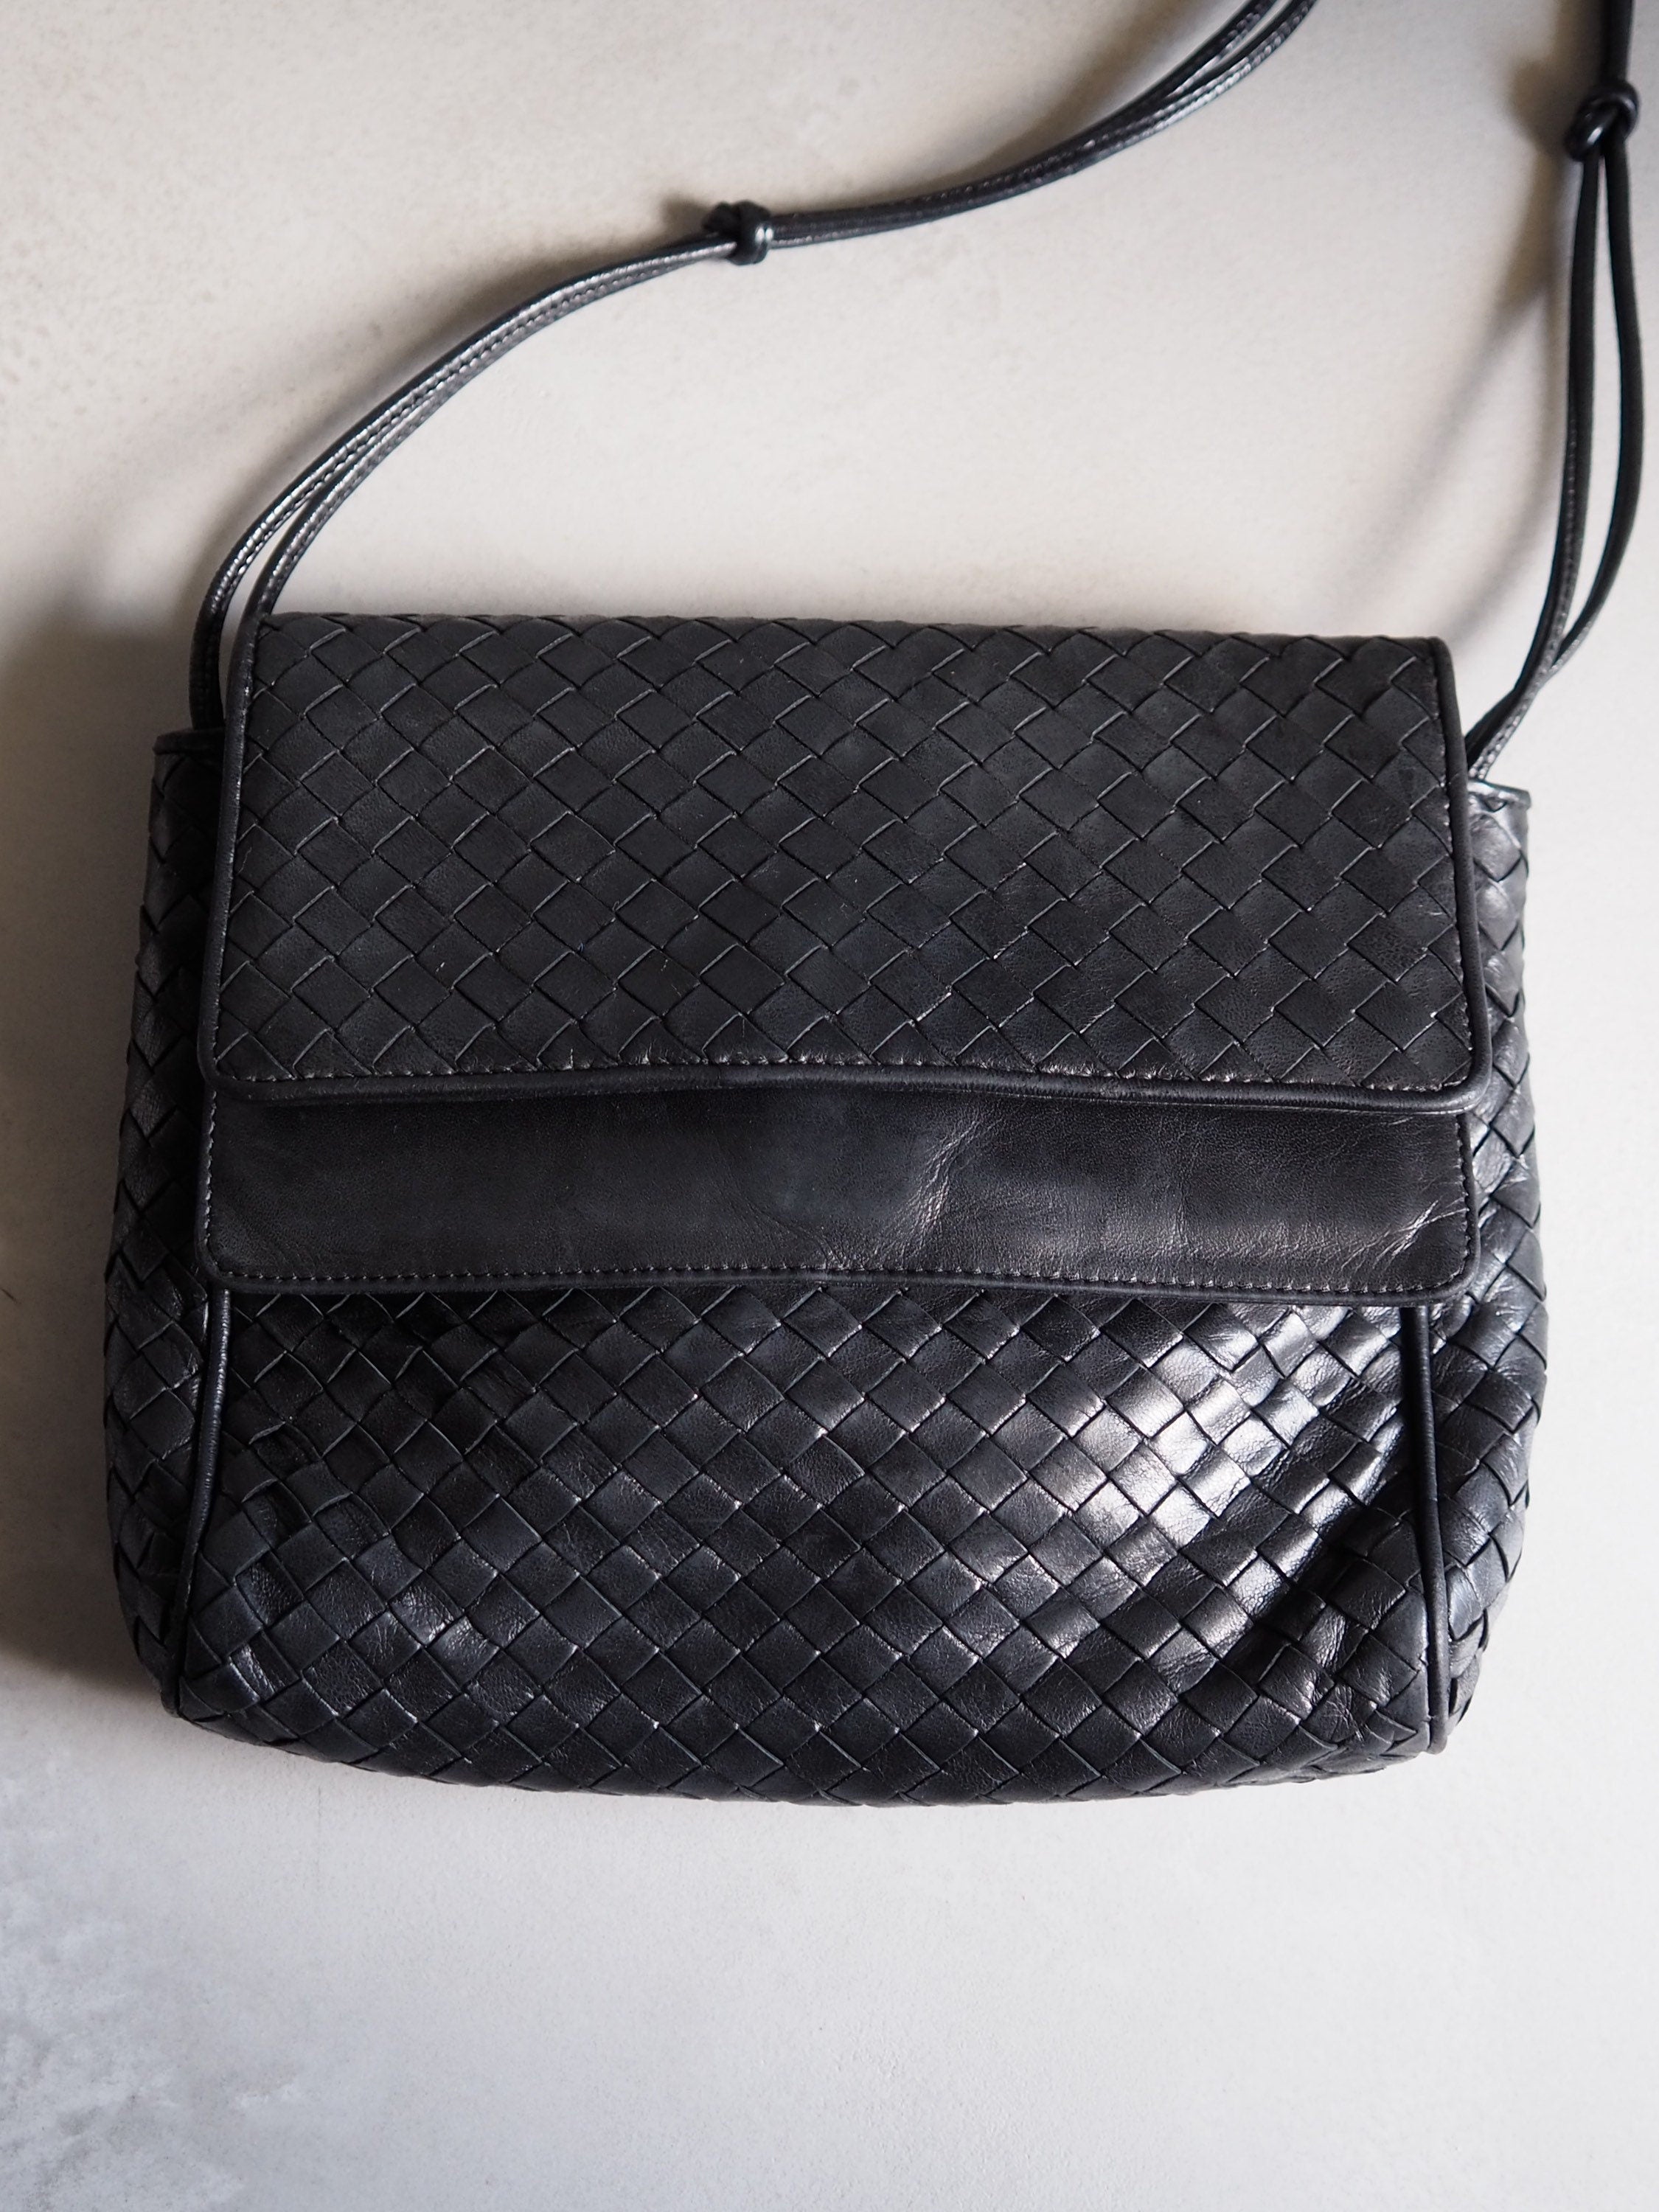 BOTTEGA VENETA Intrecciato Shoulder bag Leather Black Leather Vintage Authentic